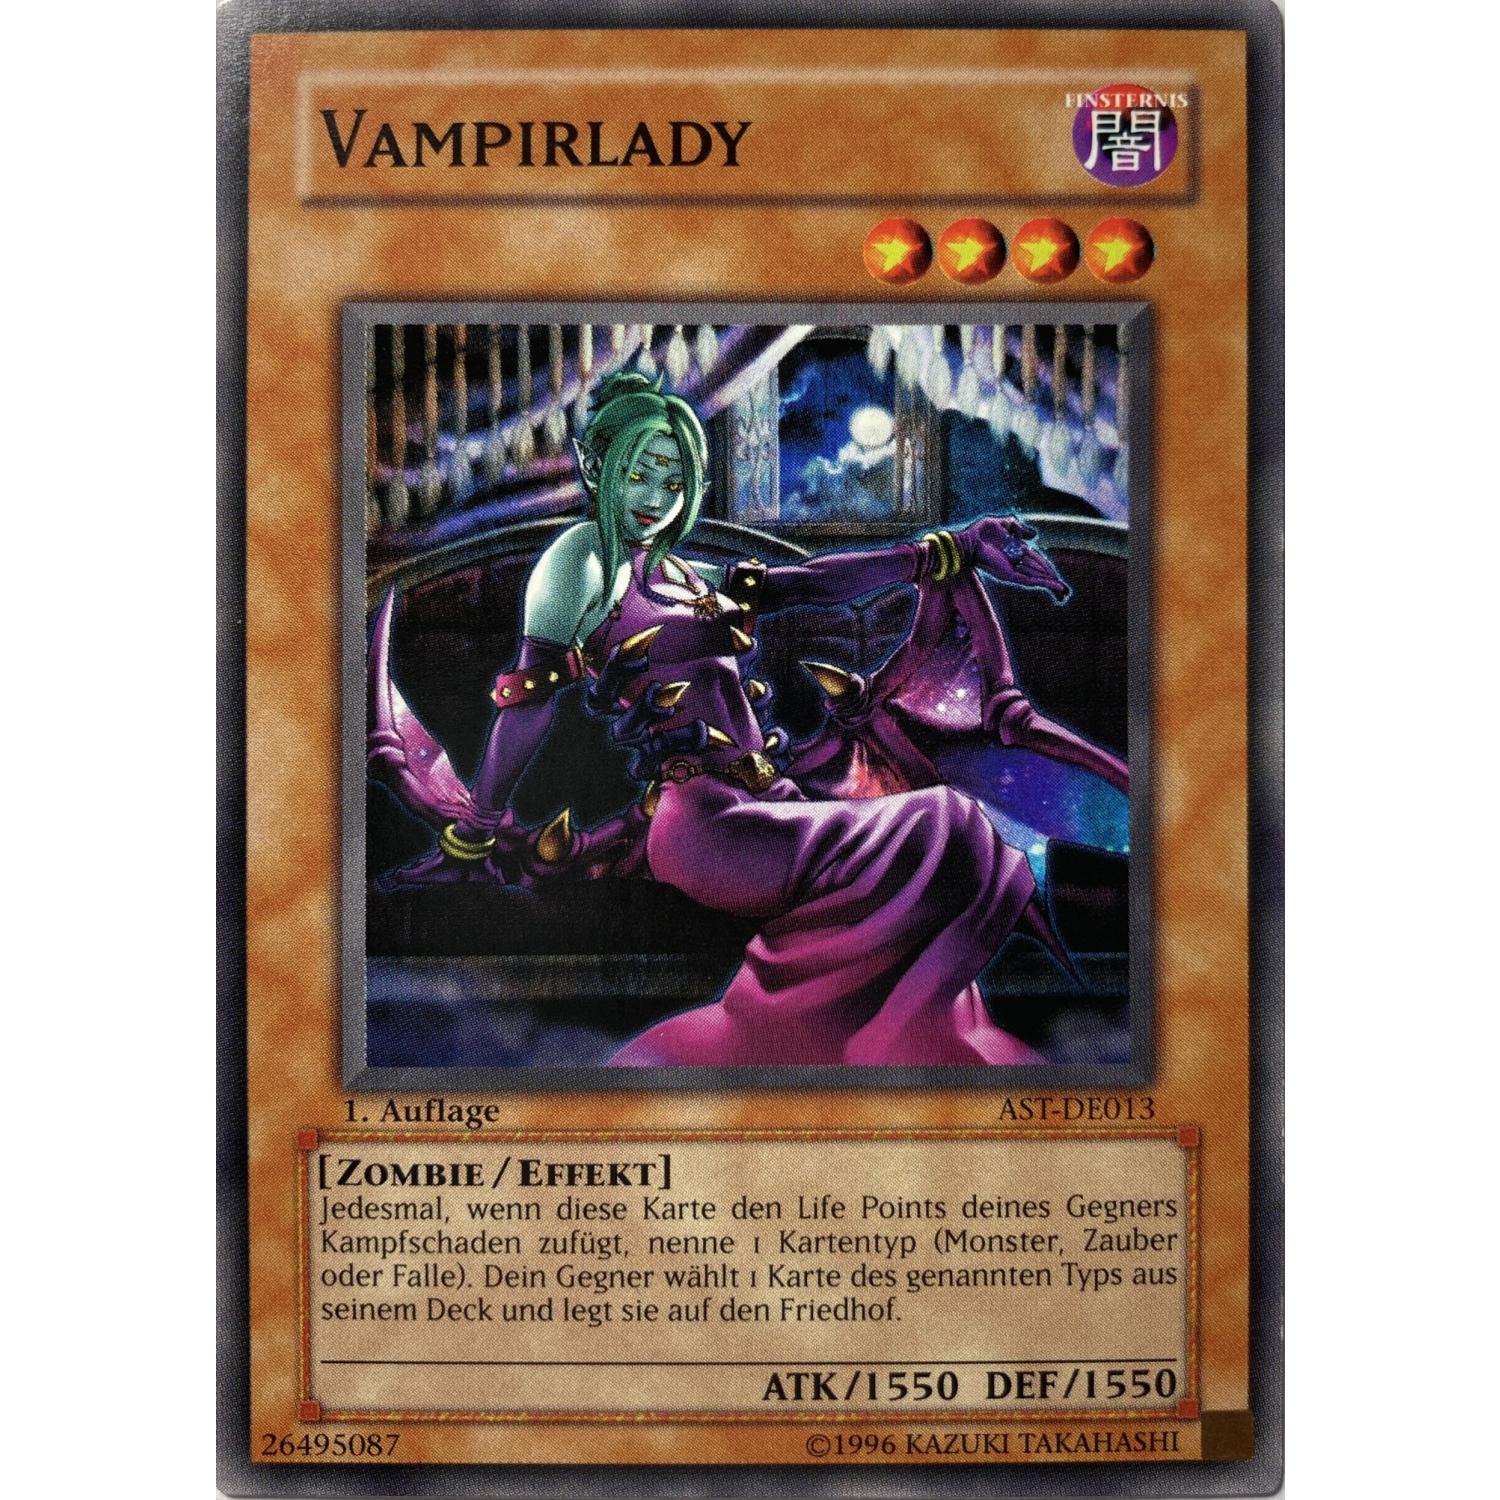 Vampirlady 1. Auflage AST-DE013 Common | EX